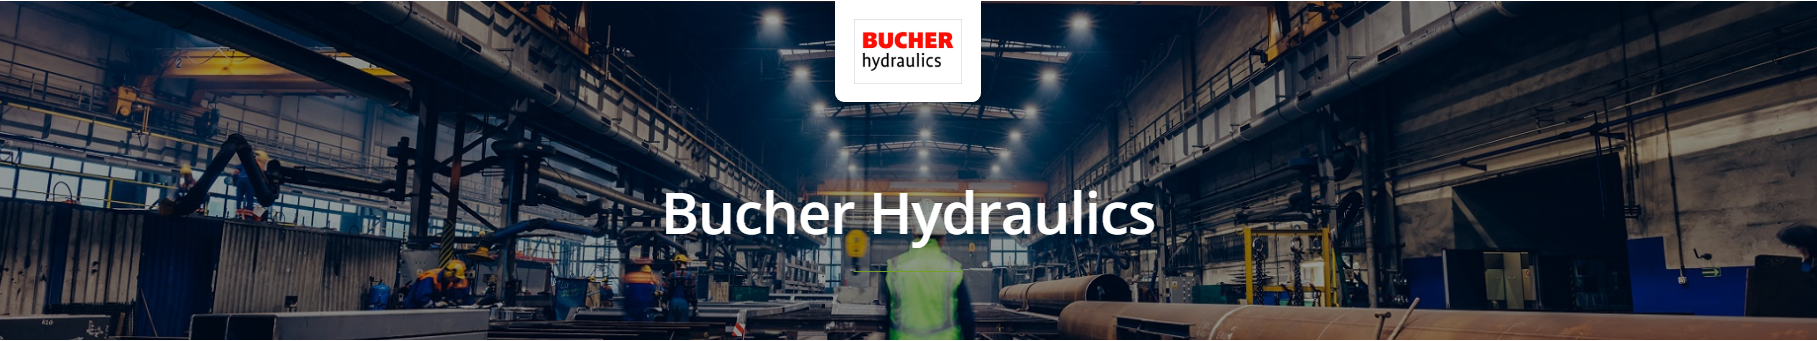 Bucher Hydraulics Motors